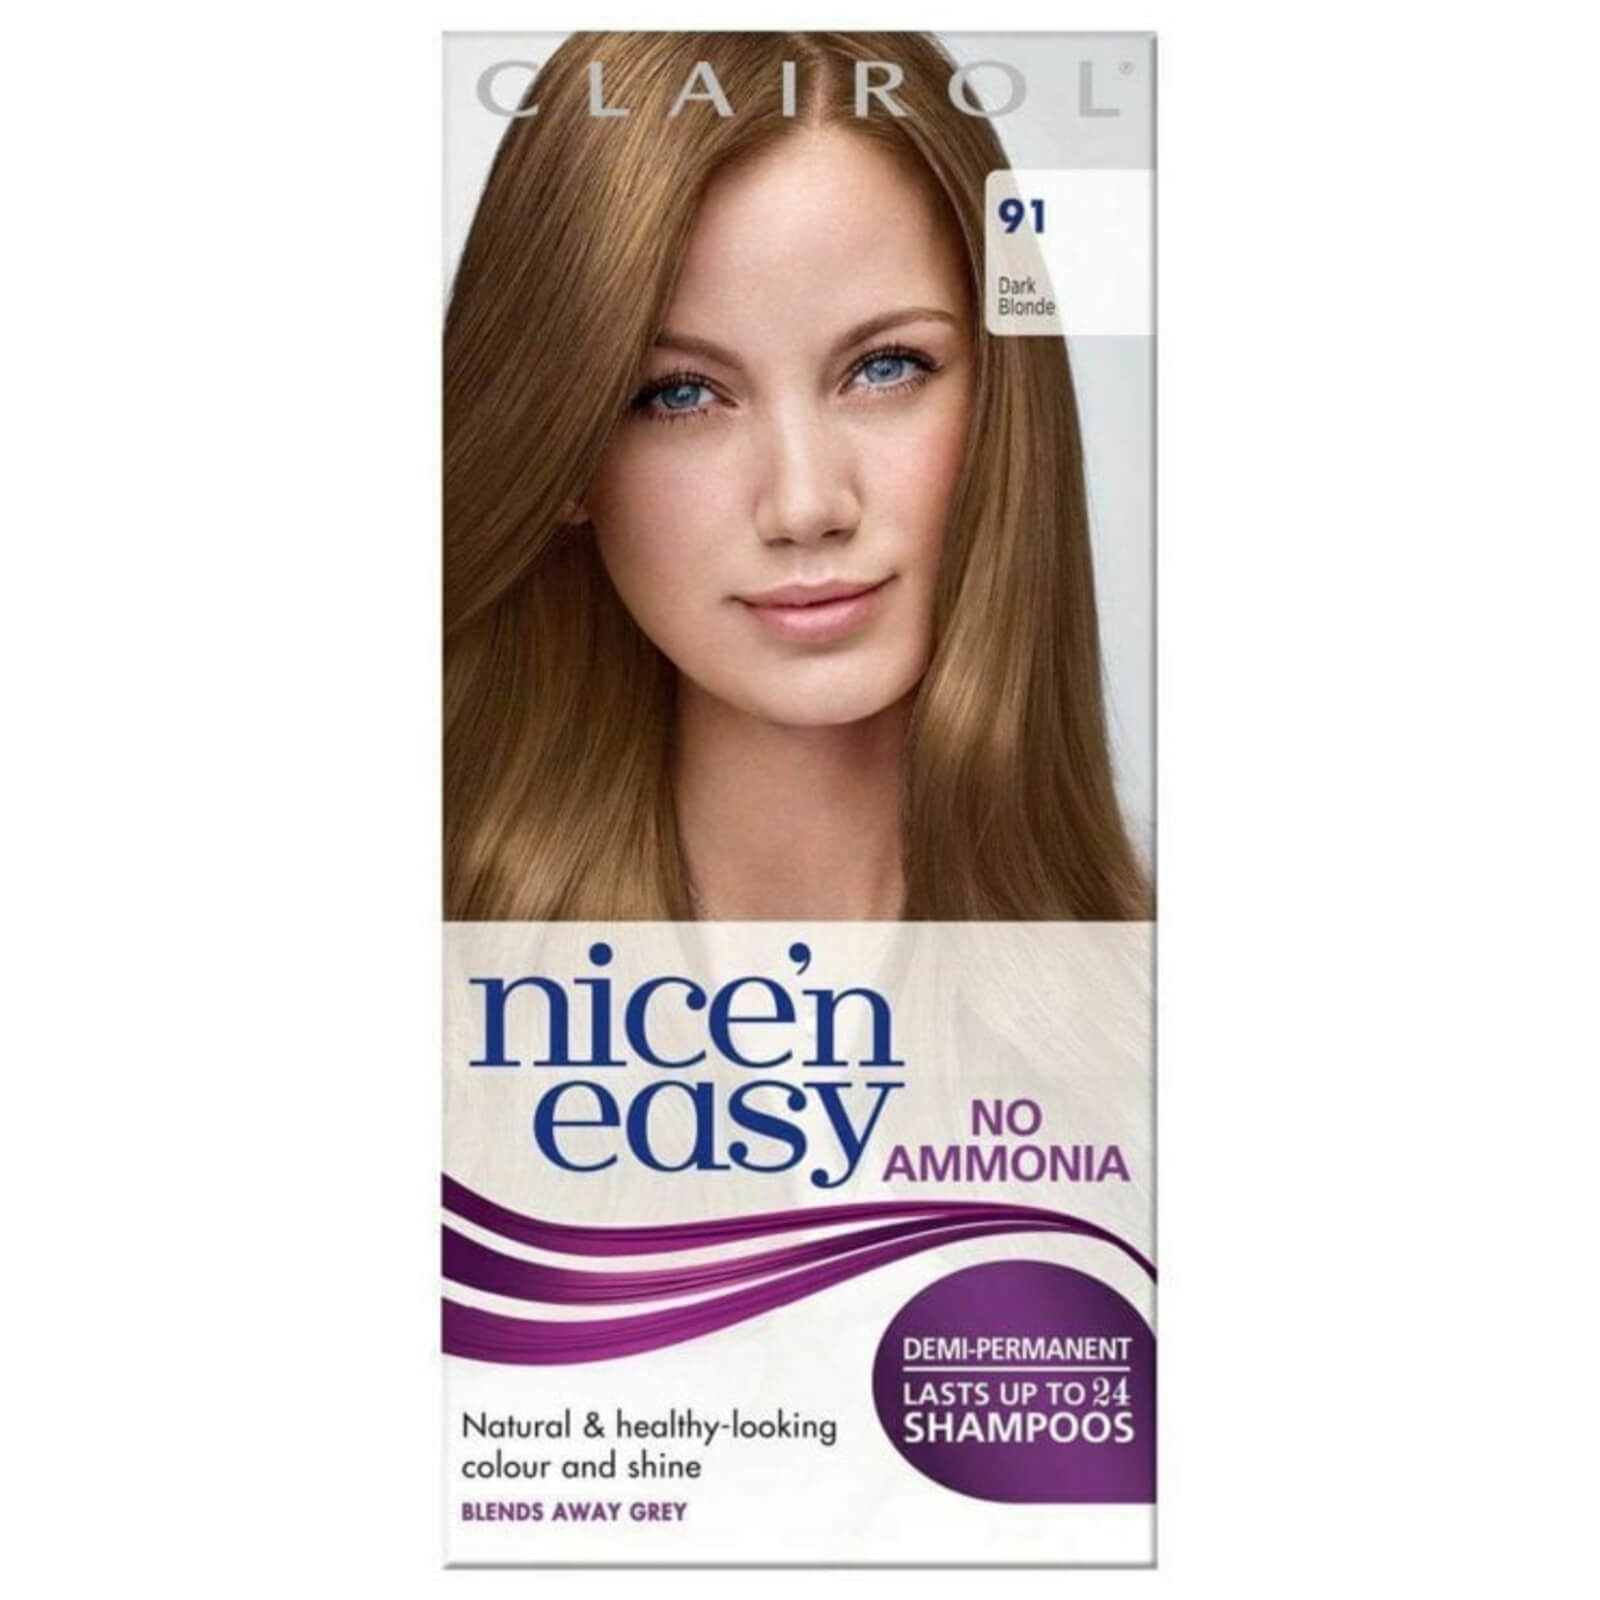 Clairol Nice'n Easy Semi-Permanent Hair Dye with No Ammonia (Various Shades) - 91 Dark Blonde